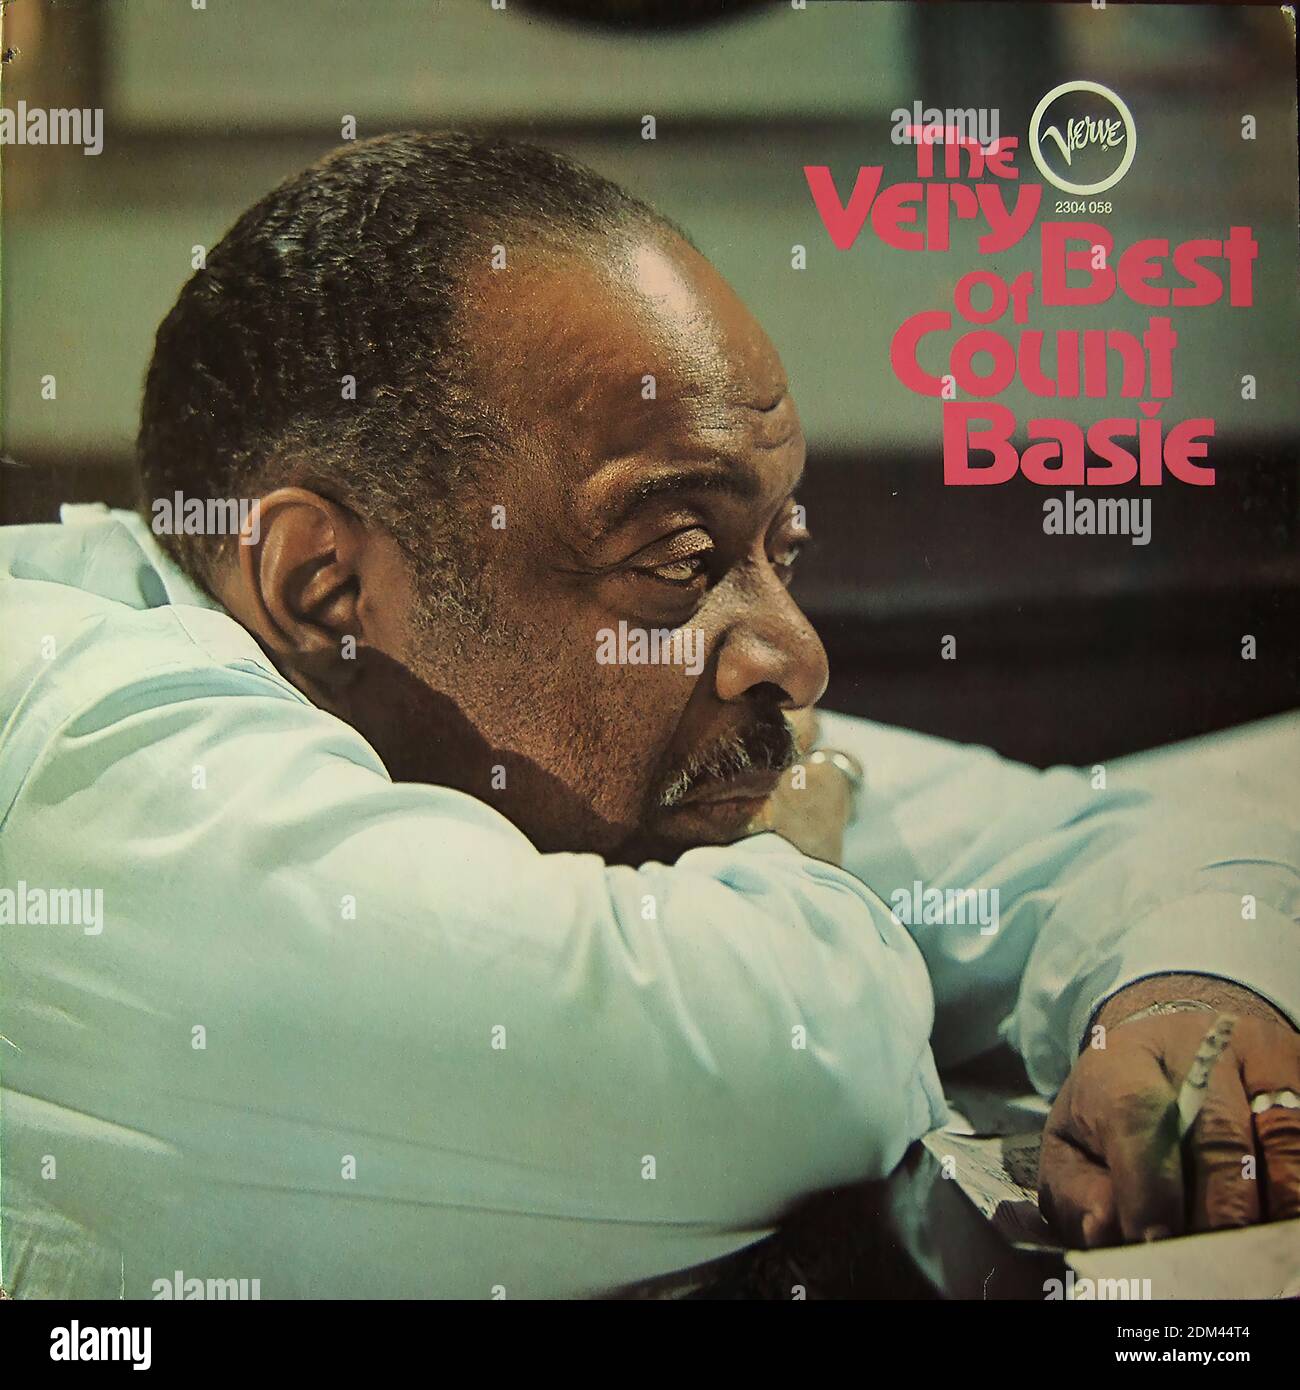 The Very Best of Count Basie, Verve - Vintage vinyl album cover Stock Photo  - Alamy